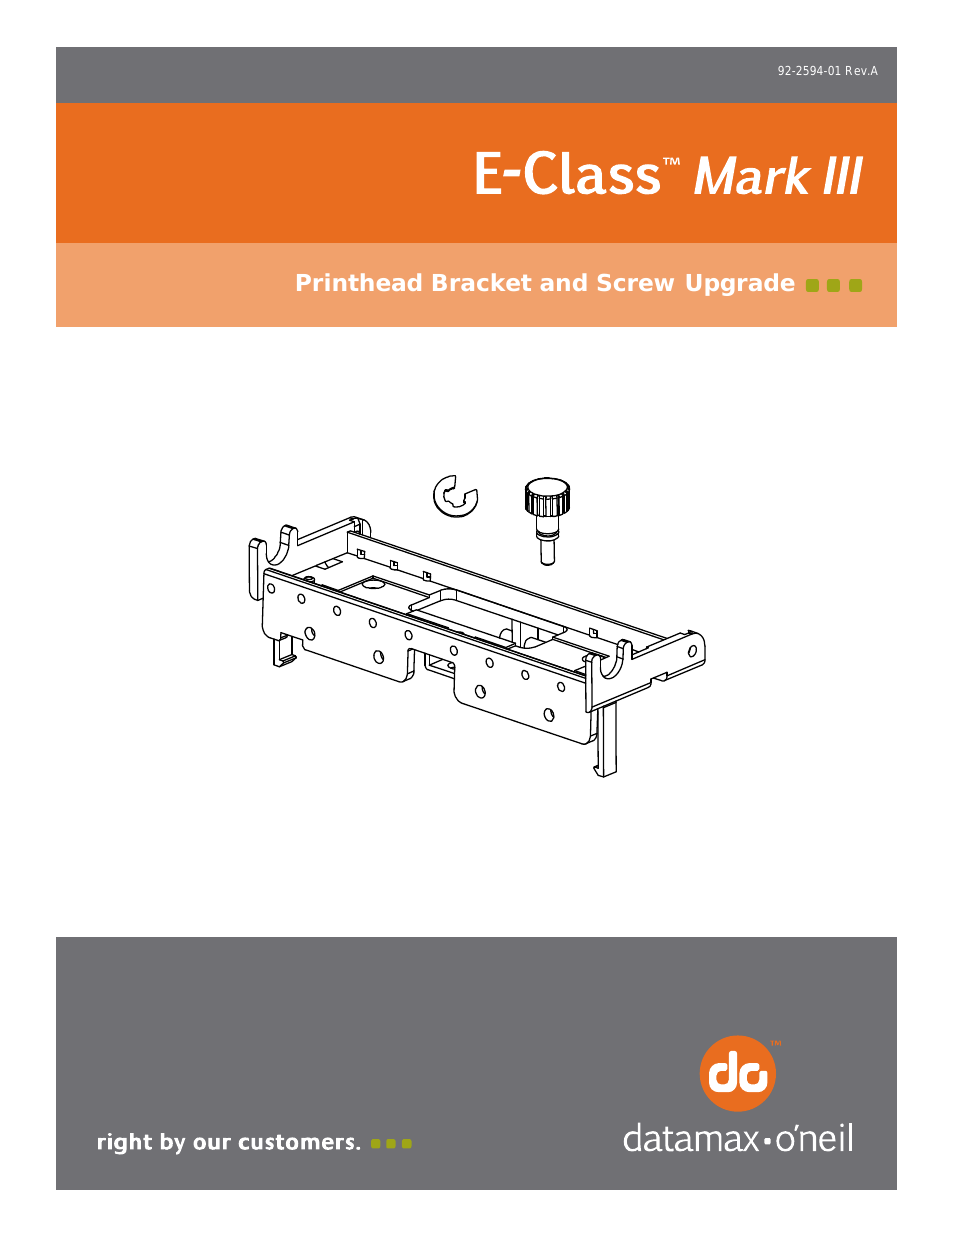 E-Class Mark III Printhead Bracket and Screw Upgrade